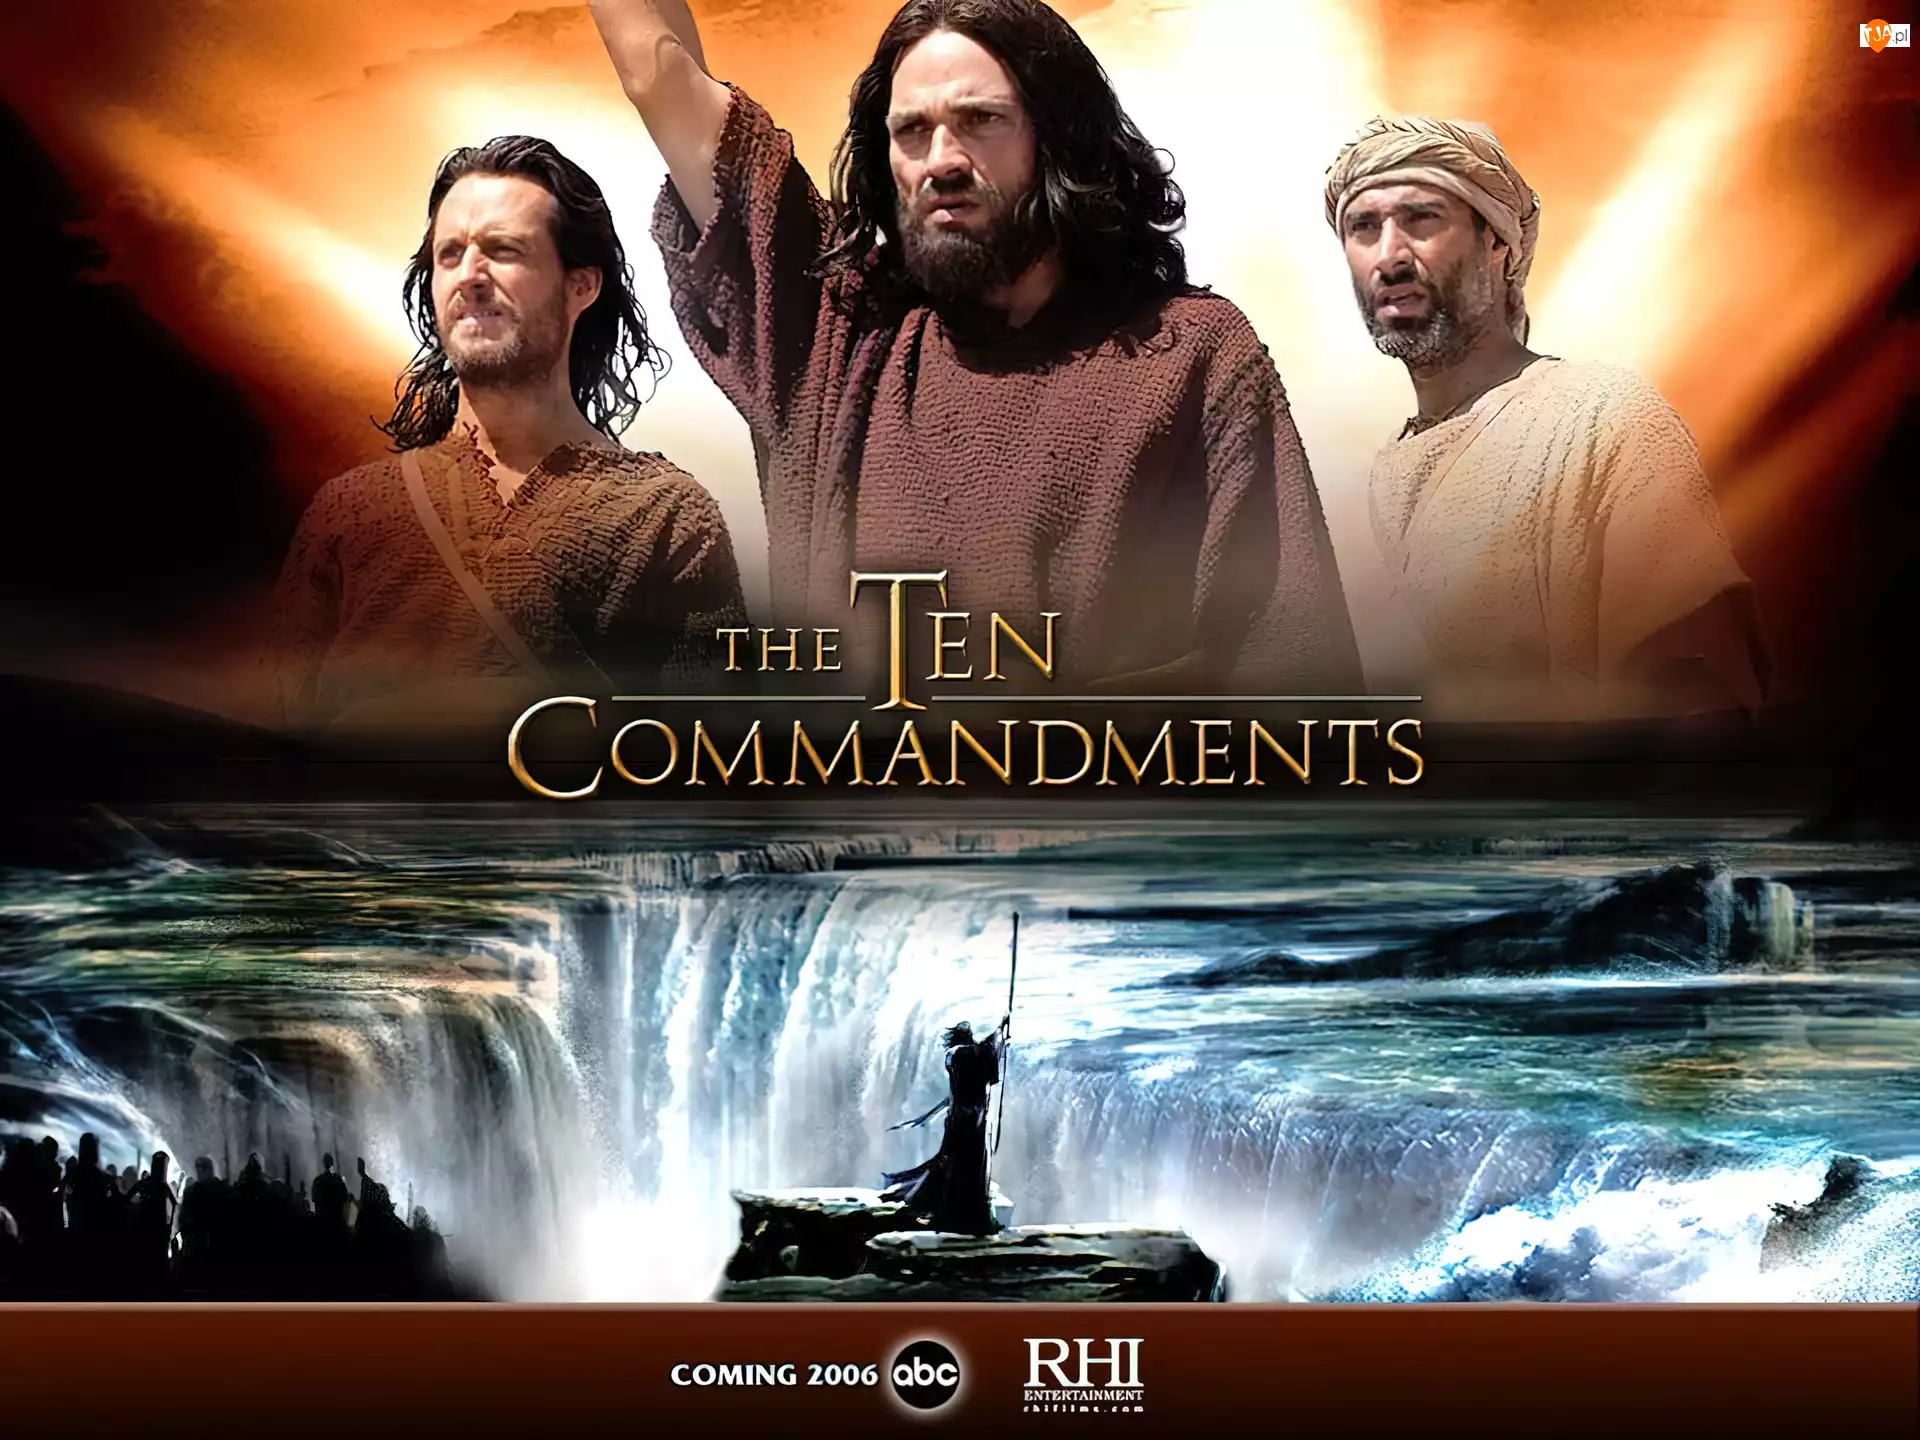 mężczyźni, napis, wodospad, The Ten Commandments, broda